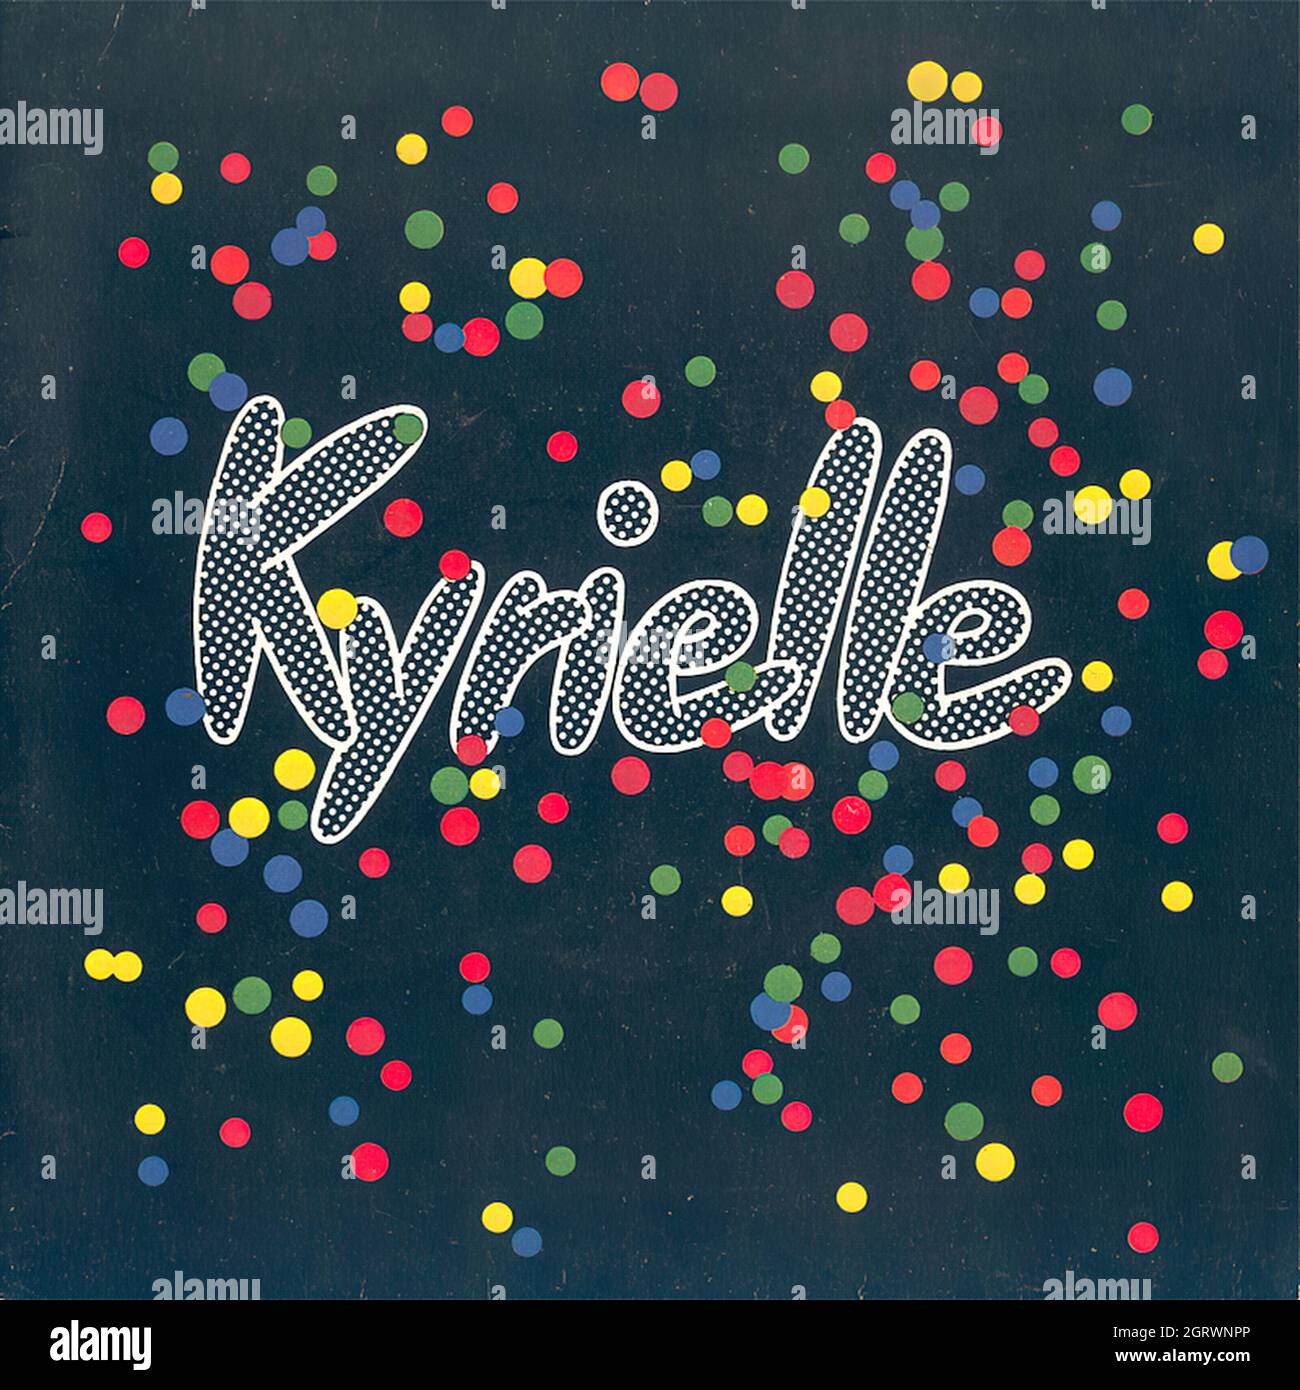 Kyrielle (Gabriel Yared - Nouvelles Galeries) Flexi - Vintage Vinyl Record Cover Stock Photo